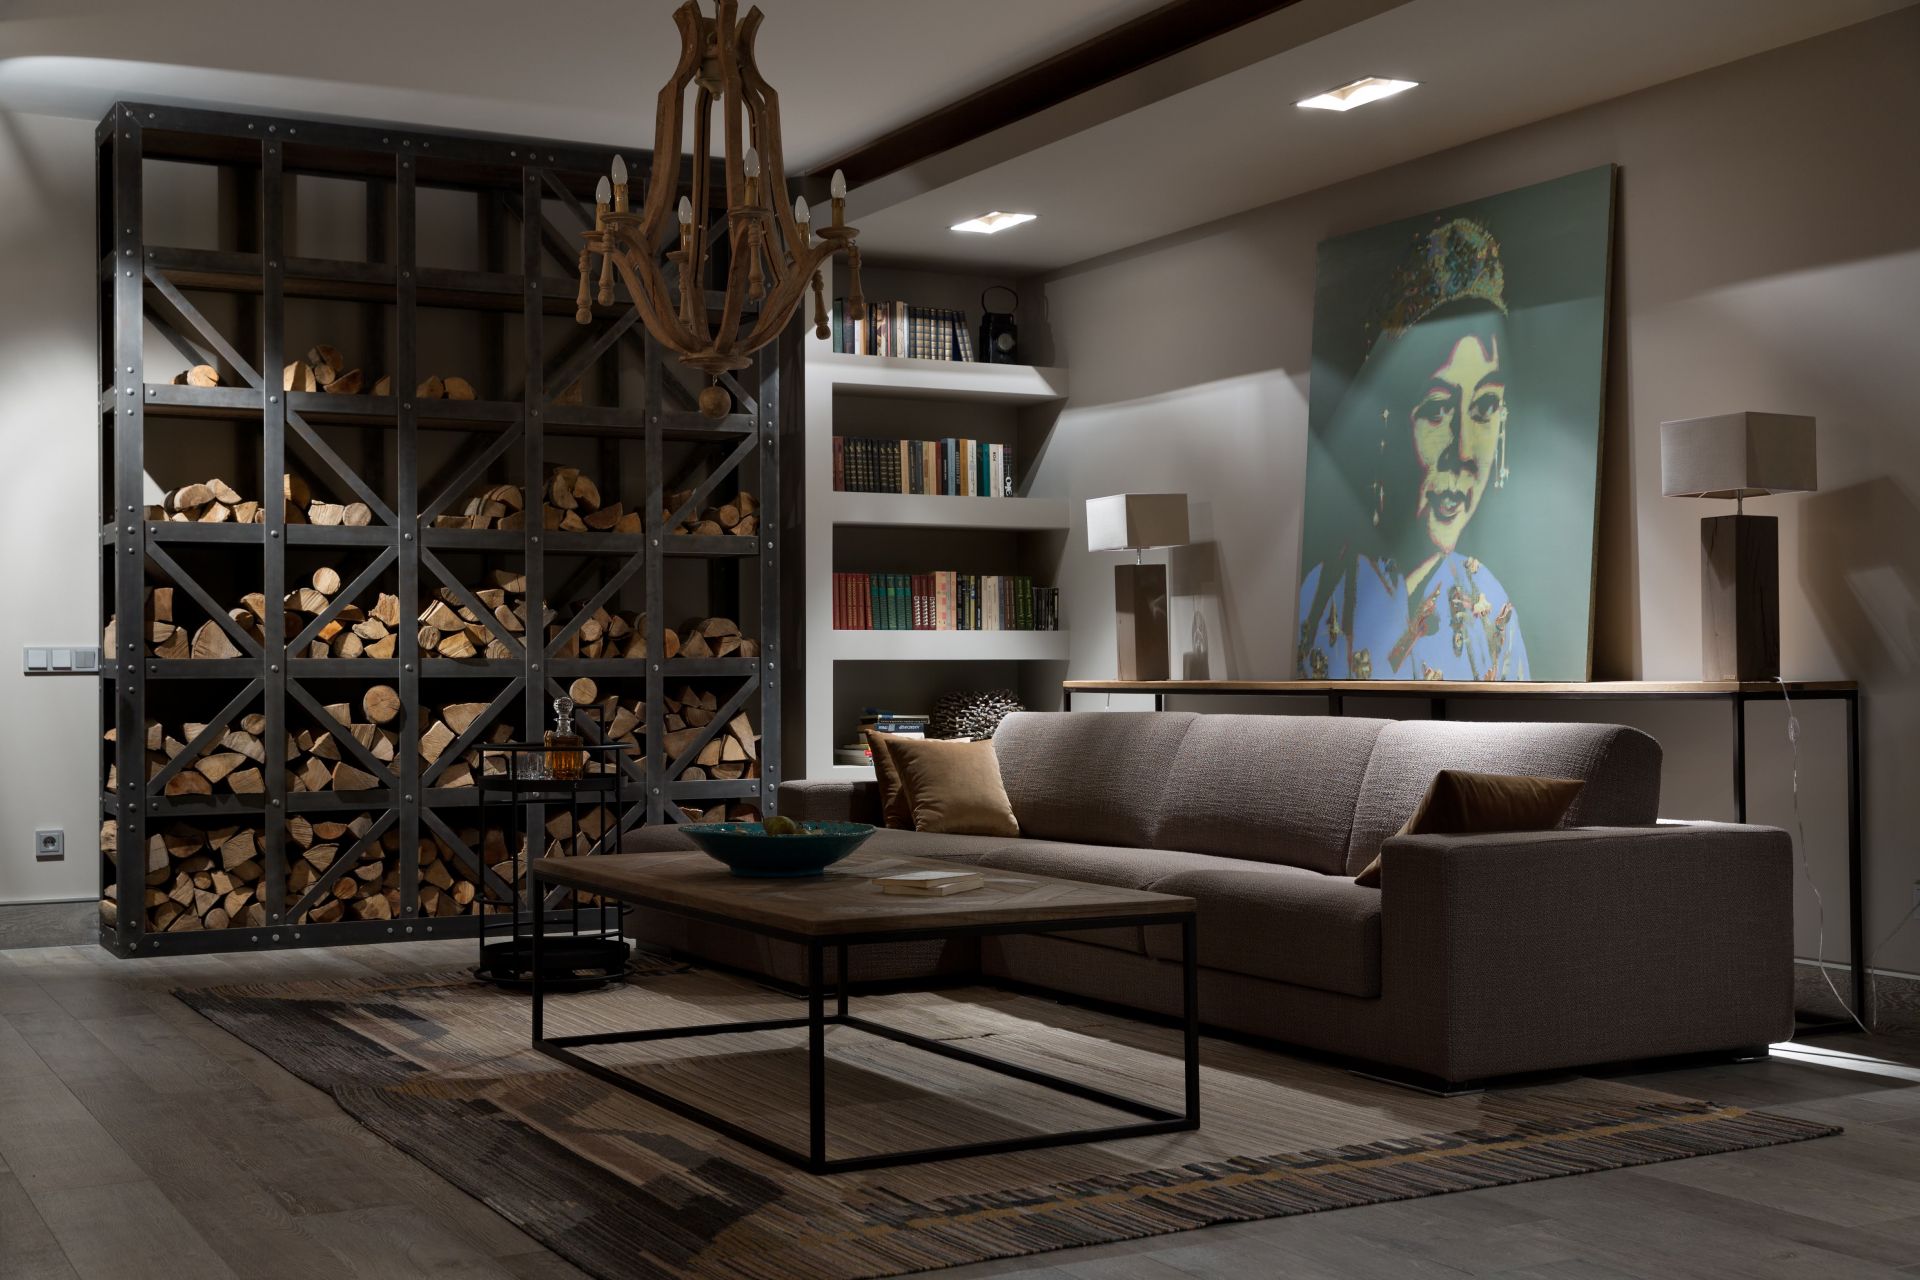 Folk-style living room interior